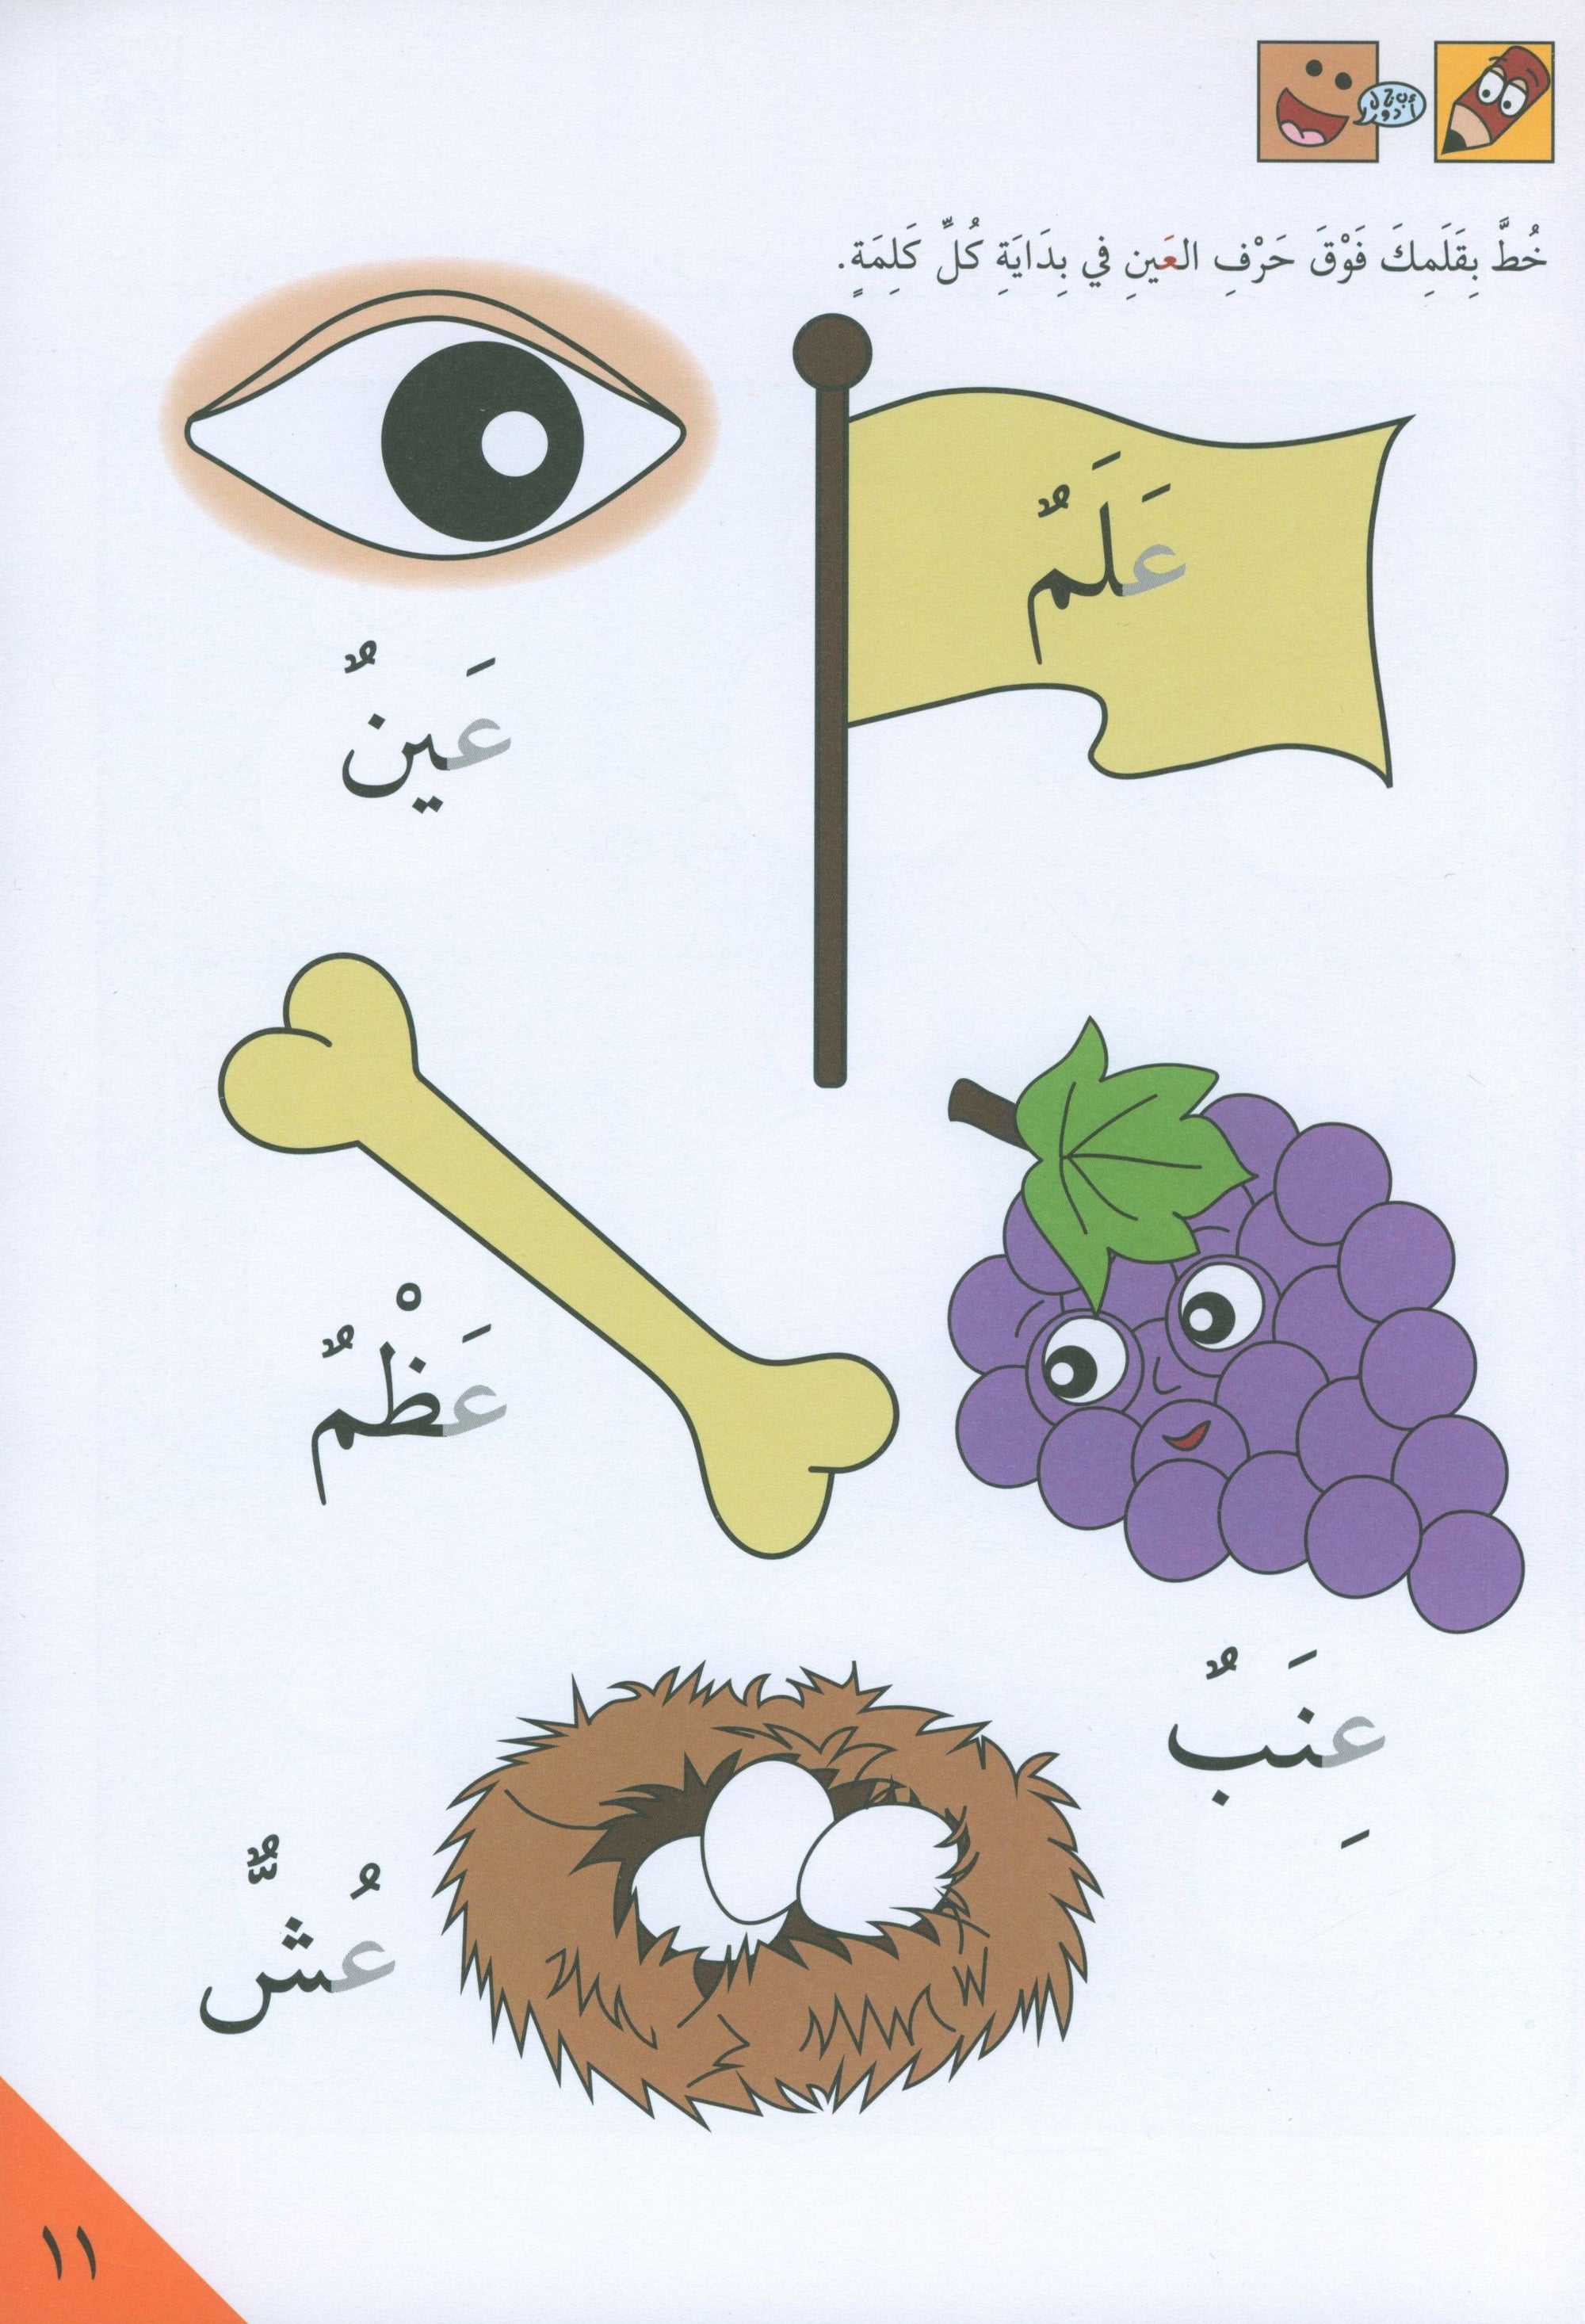 Preparing for School - My Arabic Letters Part 2 الاستعداد للمدرسة - أحرفي العربية